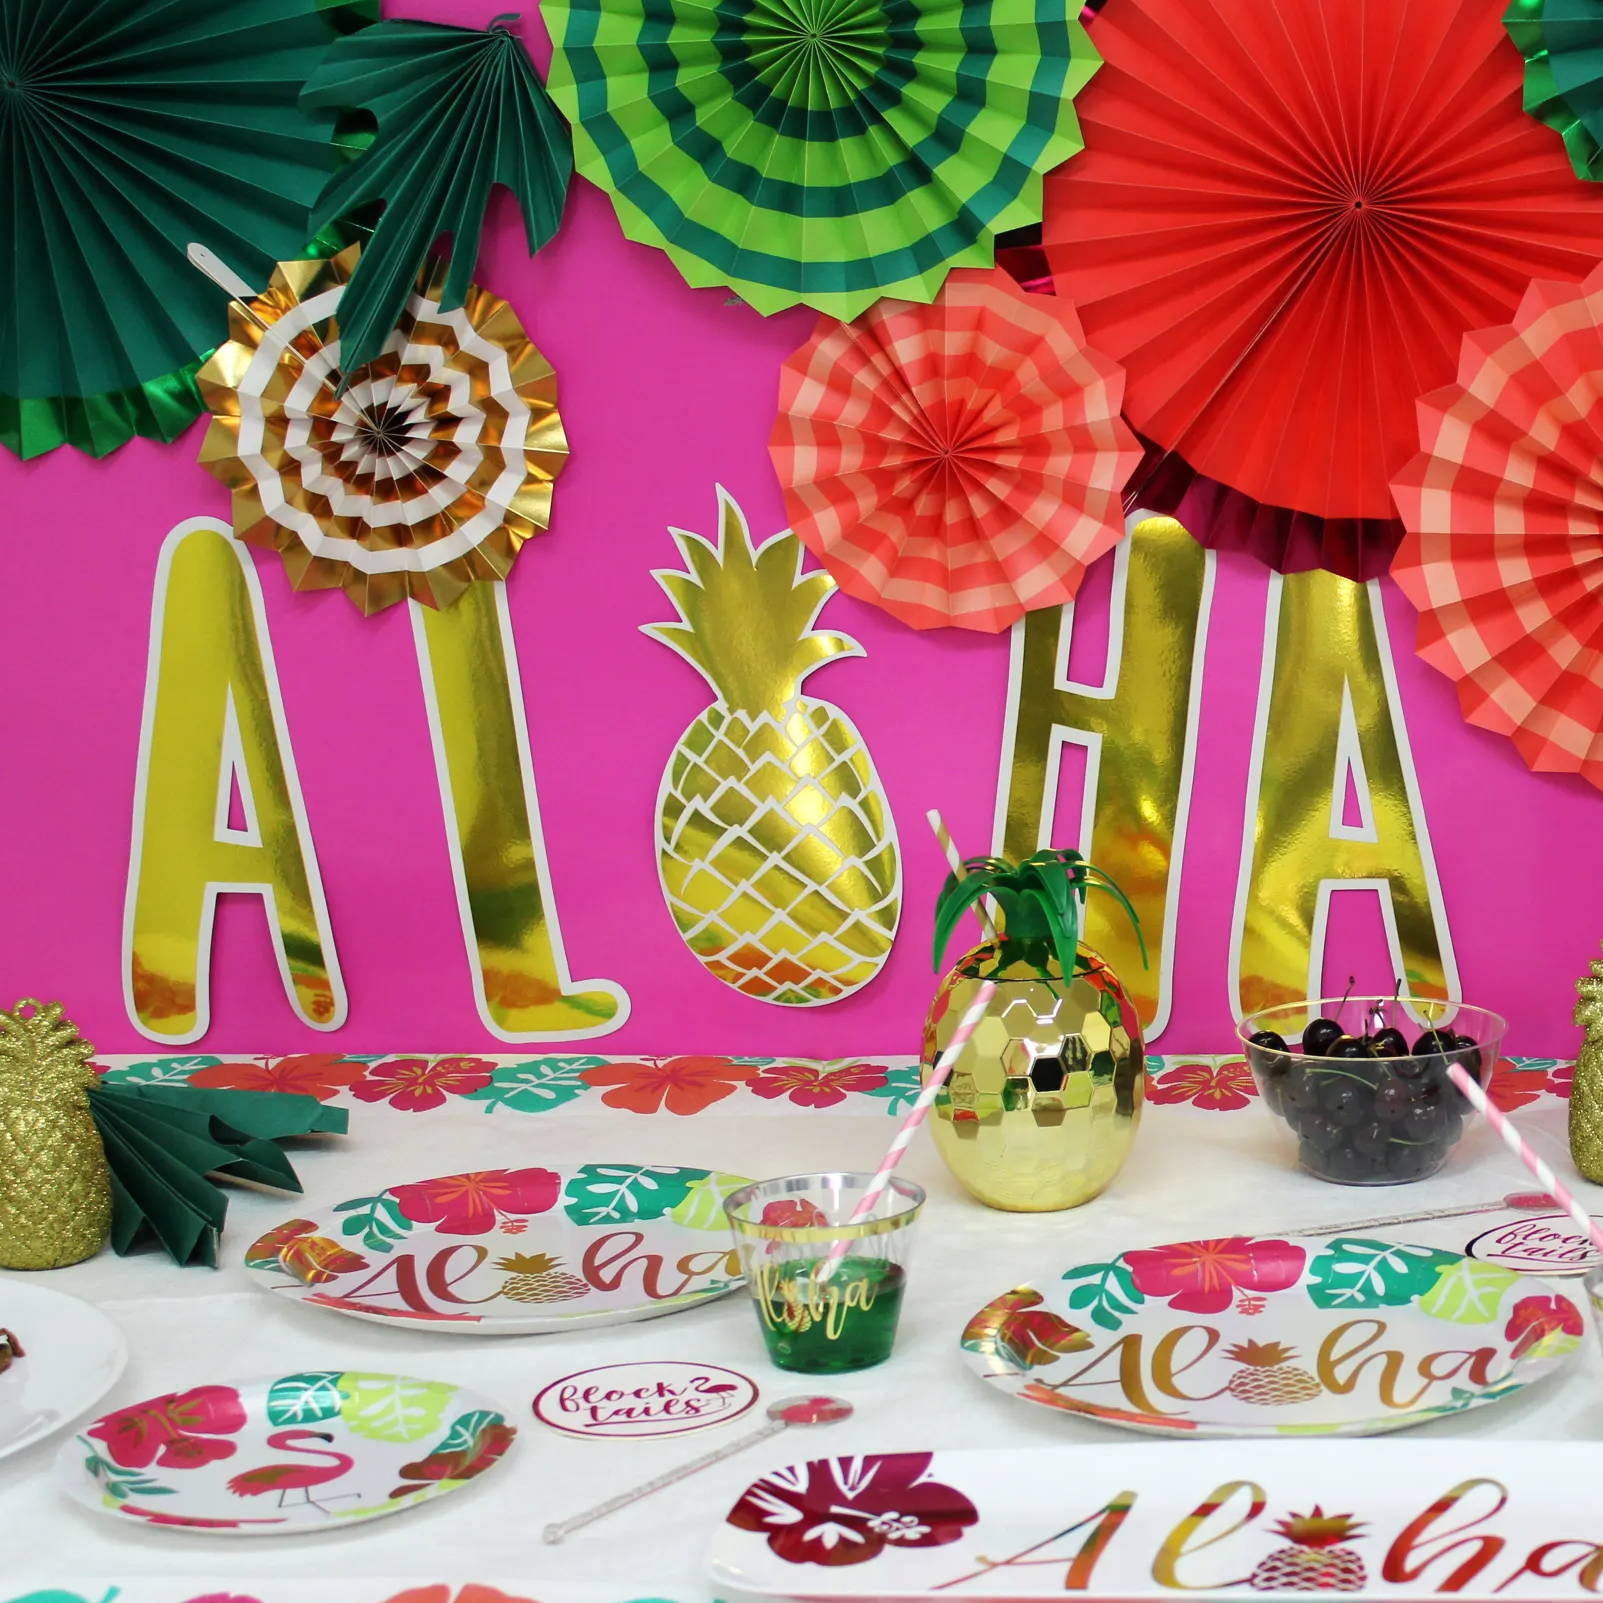 Decorations and table setting in aloha Hawaiian themed decor.